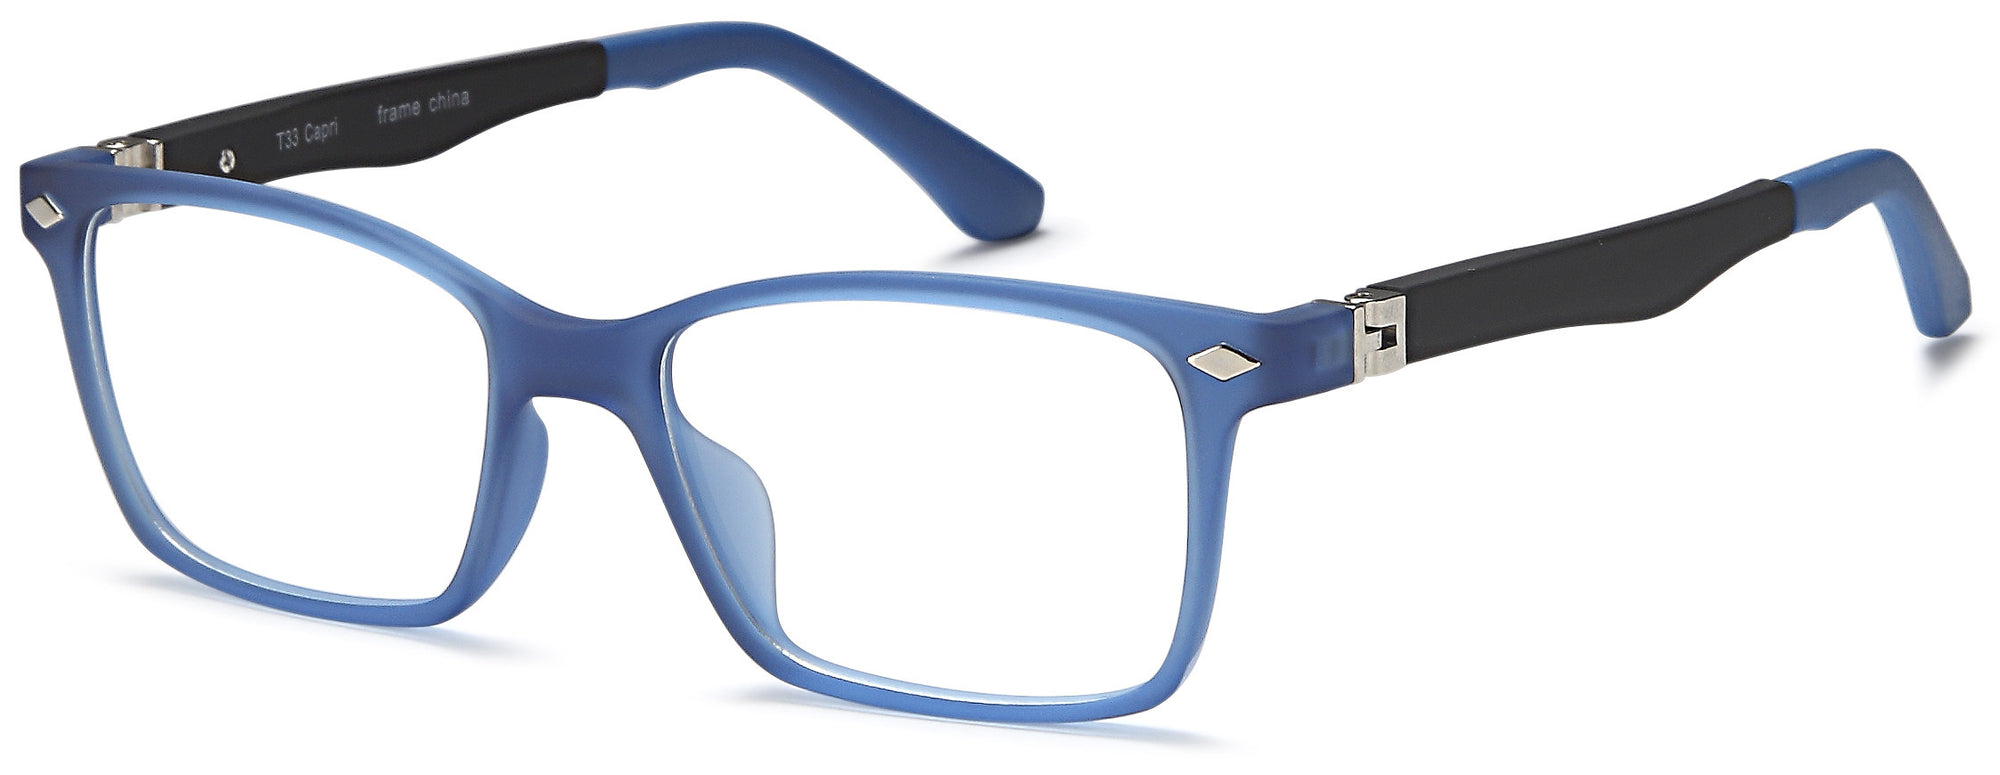 TRENDY Eyeglasses T33 - Go-Readers.com